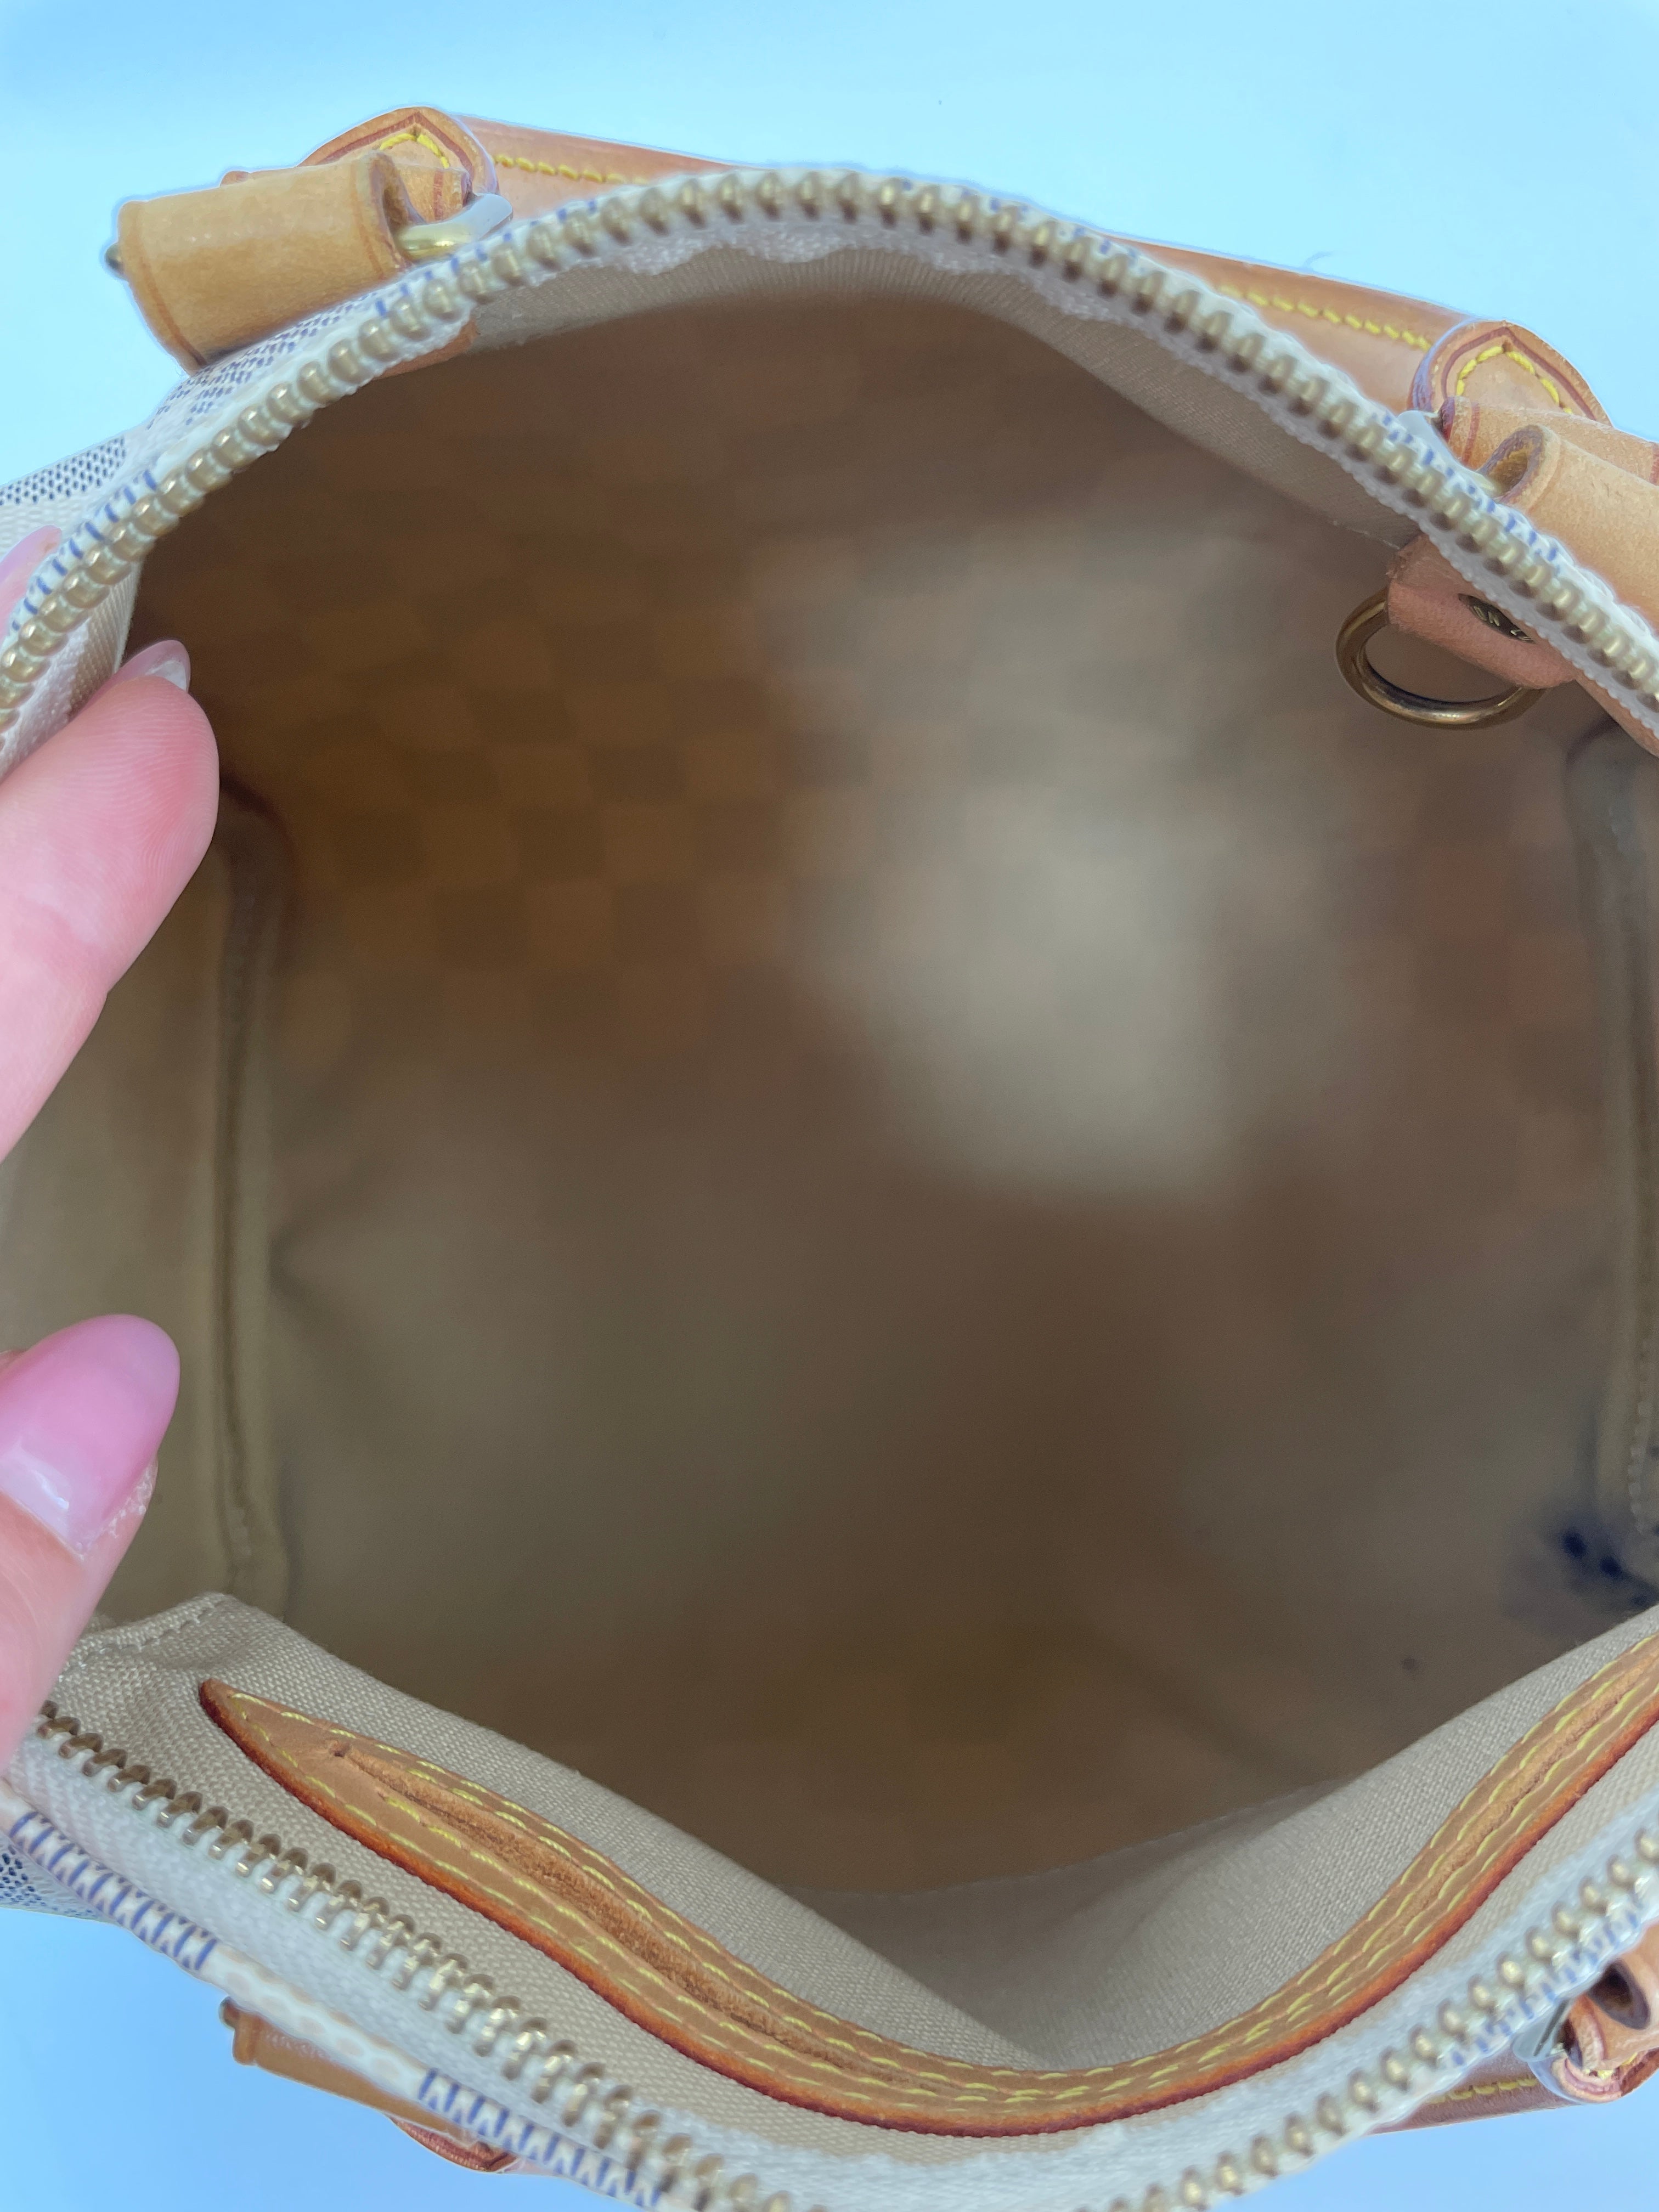 Louis Vuitton Speedy 25 Damier Azur Handbag Used (6111)